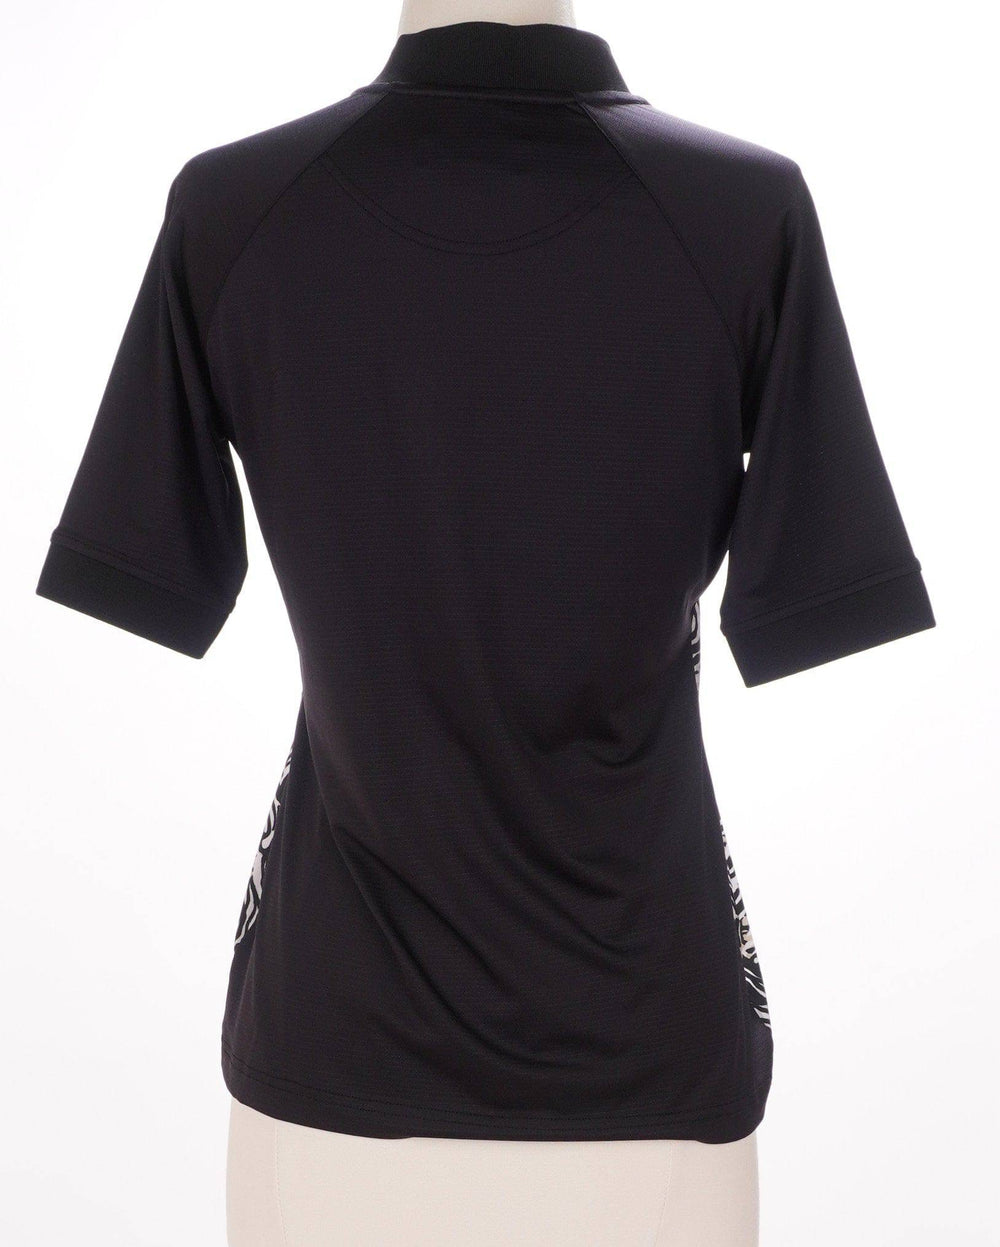 Sport Haley Small / Black / Consigned Sport Haley Shirt Sleeve Golf Shirt - Zebra-Black - Size Small